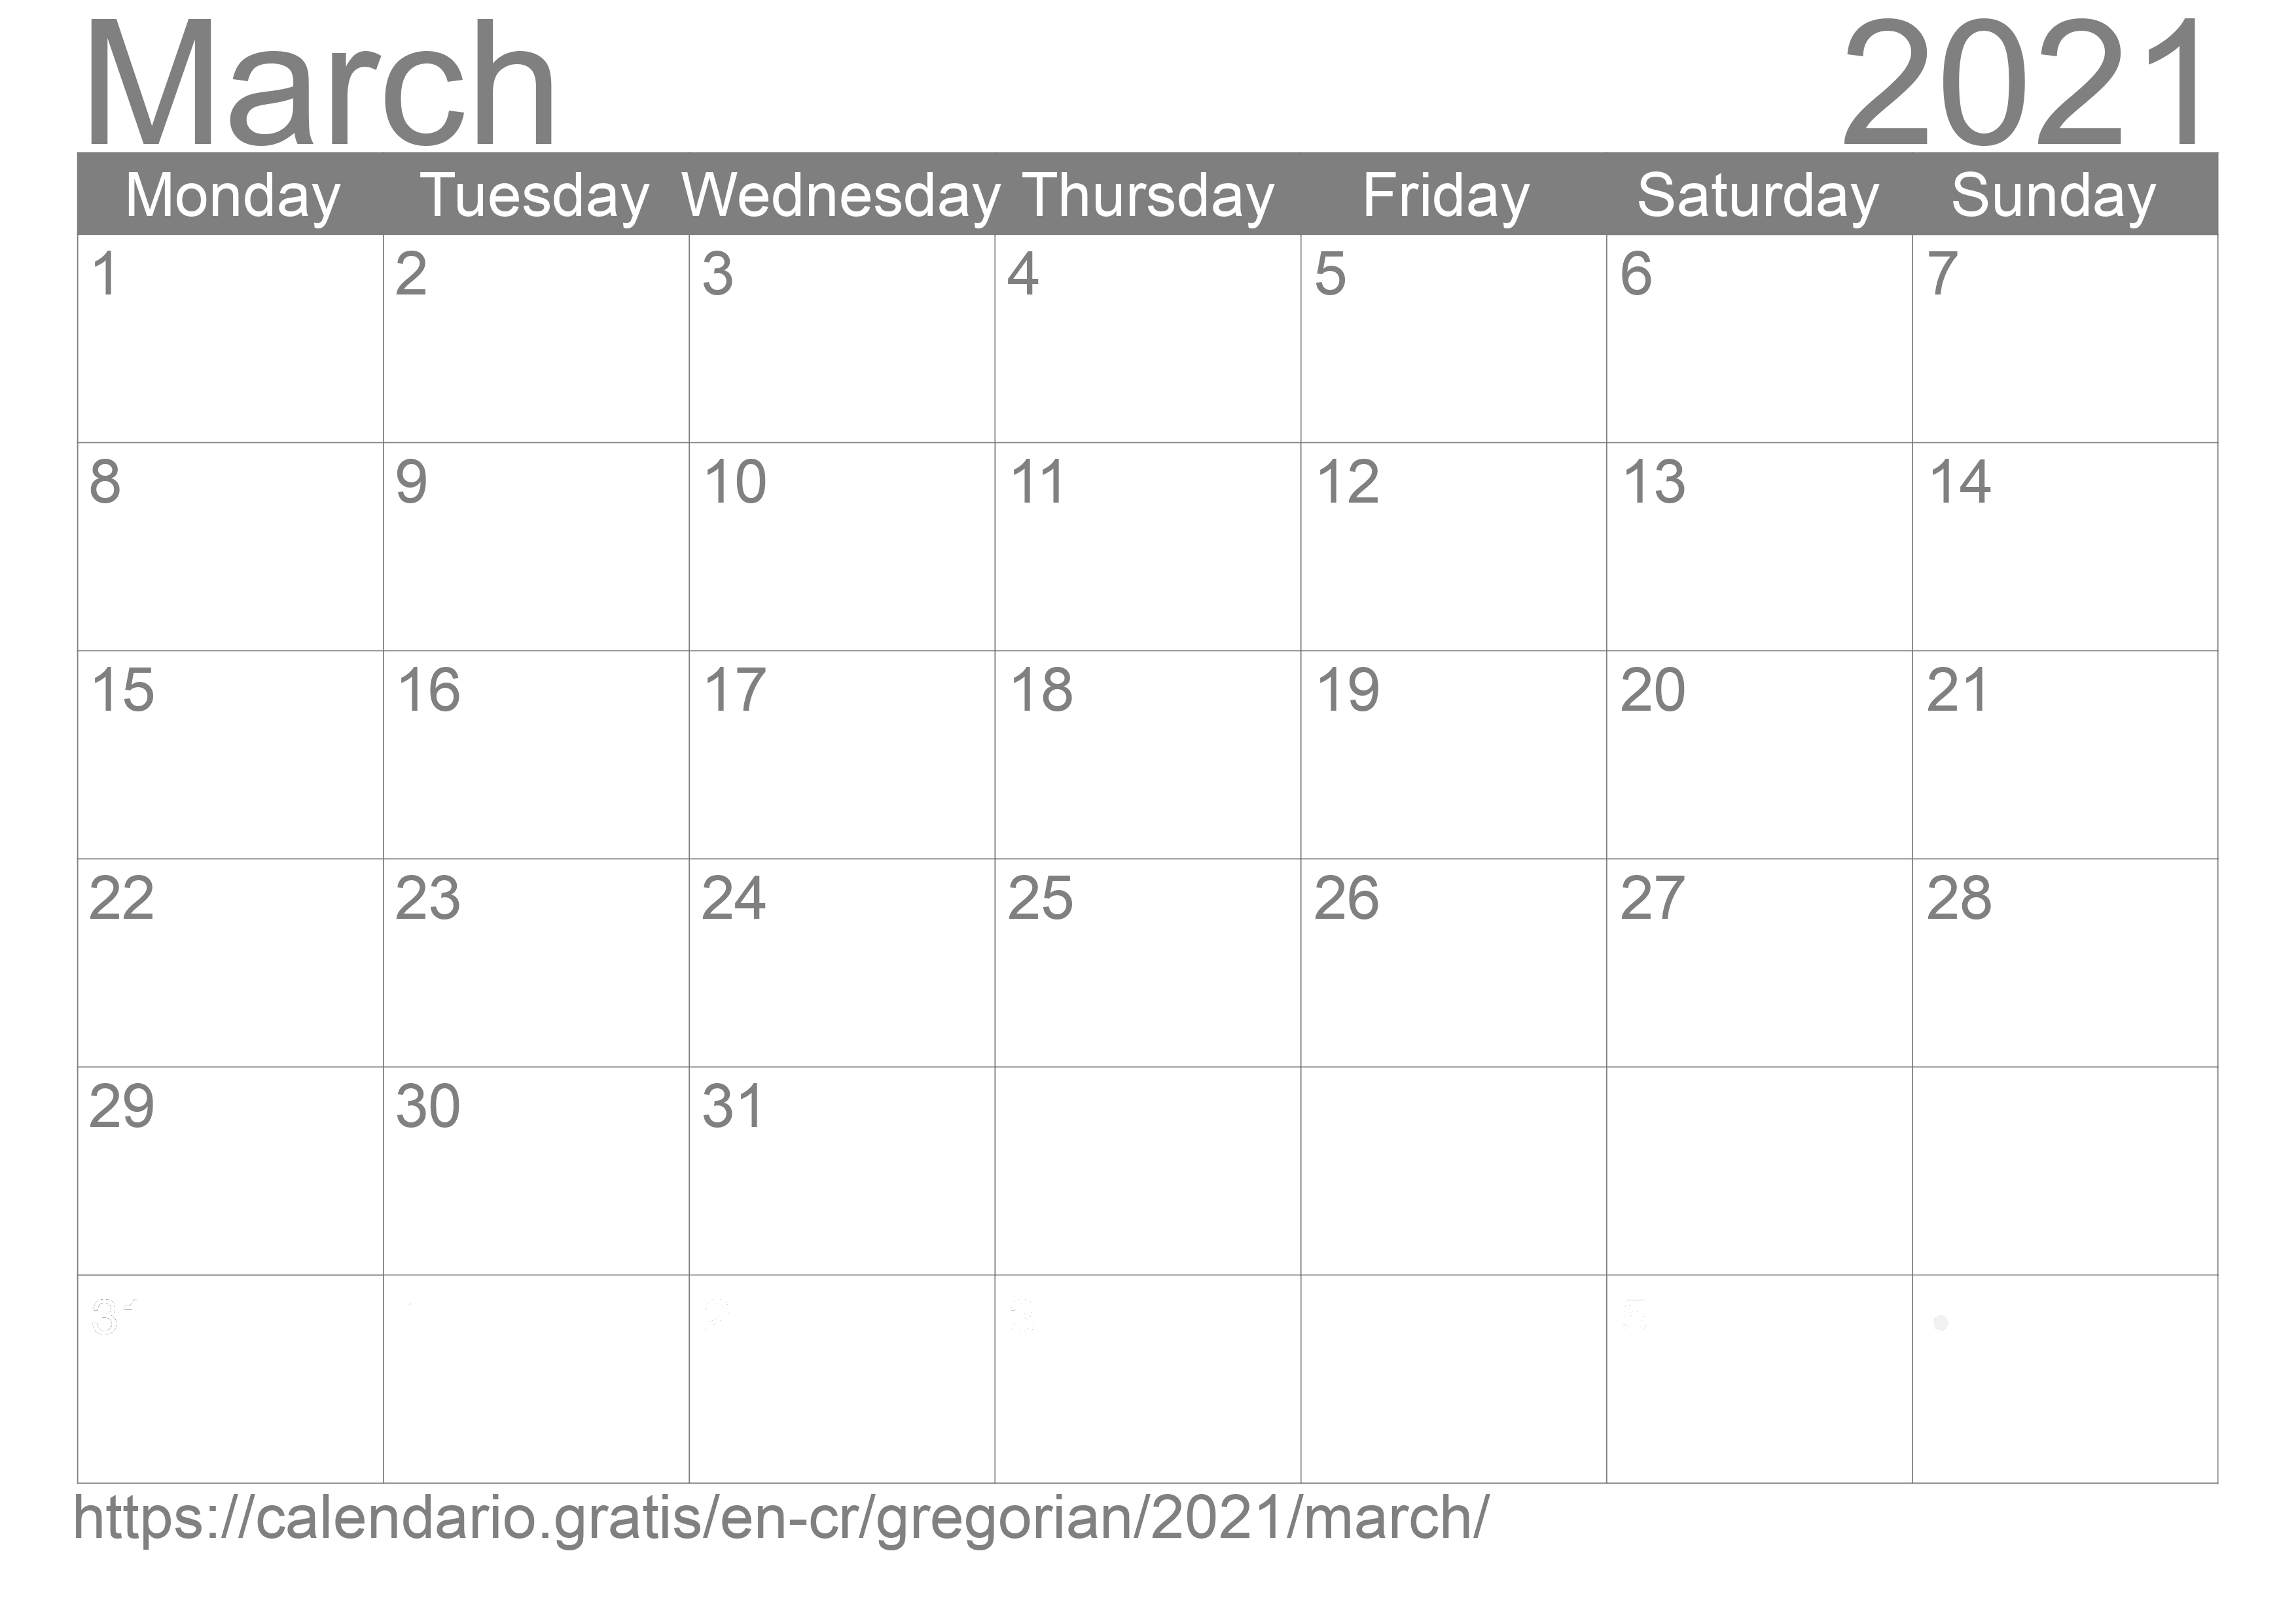 Calendar March 2021 to print